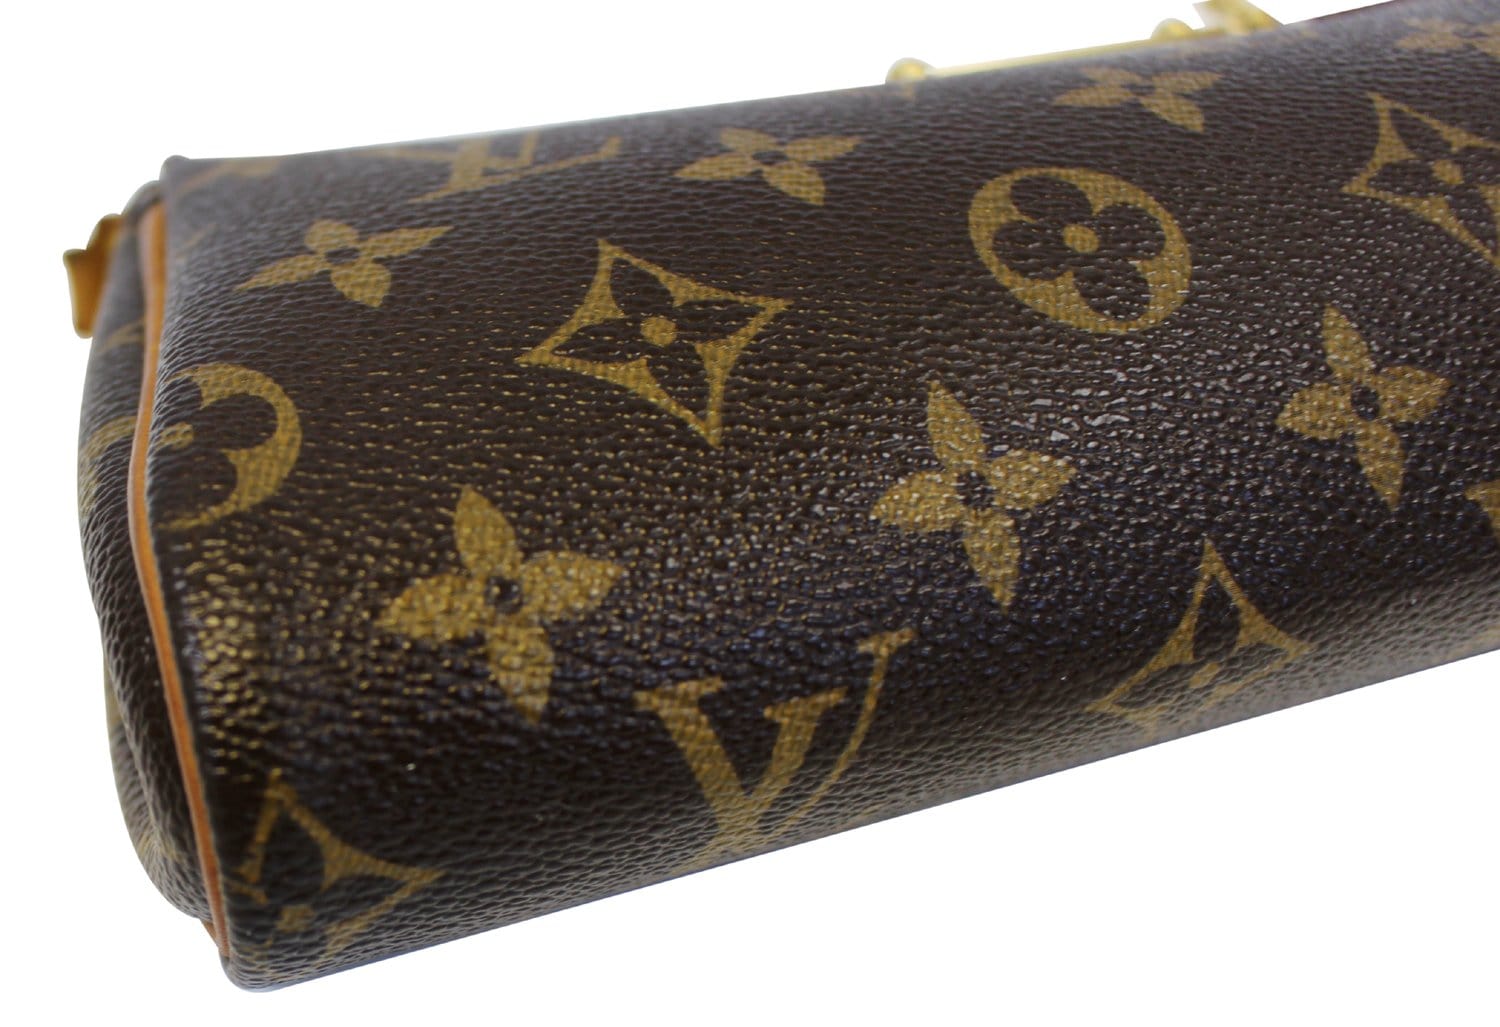 Louis Vuitton Monogram Weekend Xmas Pochette Clutch Crossbody Limited Edition (LXOR) 144020000028 Do